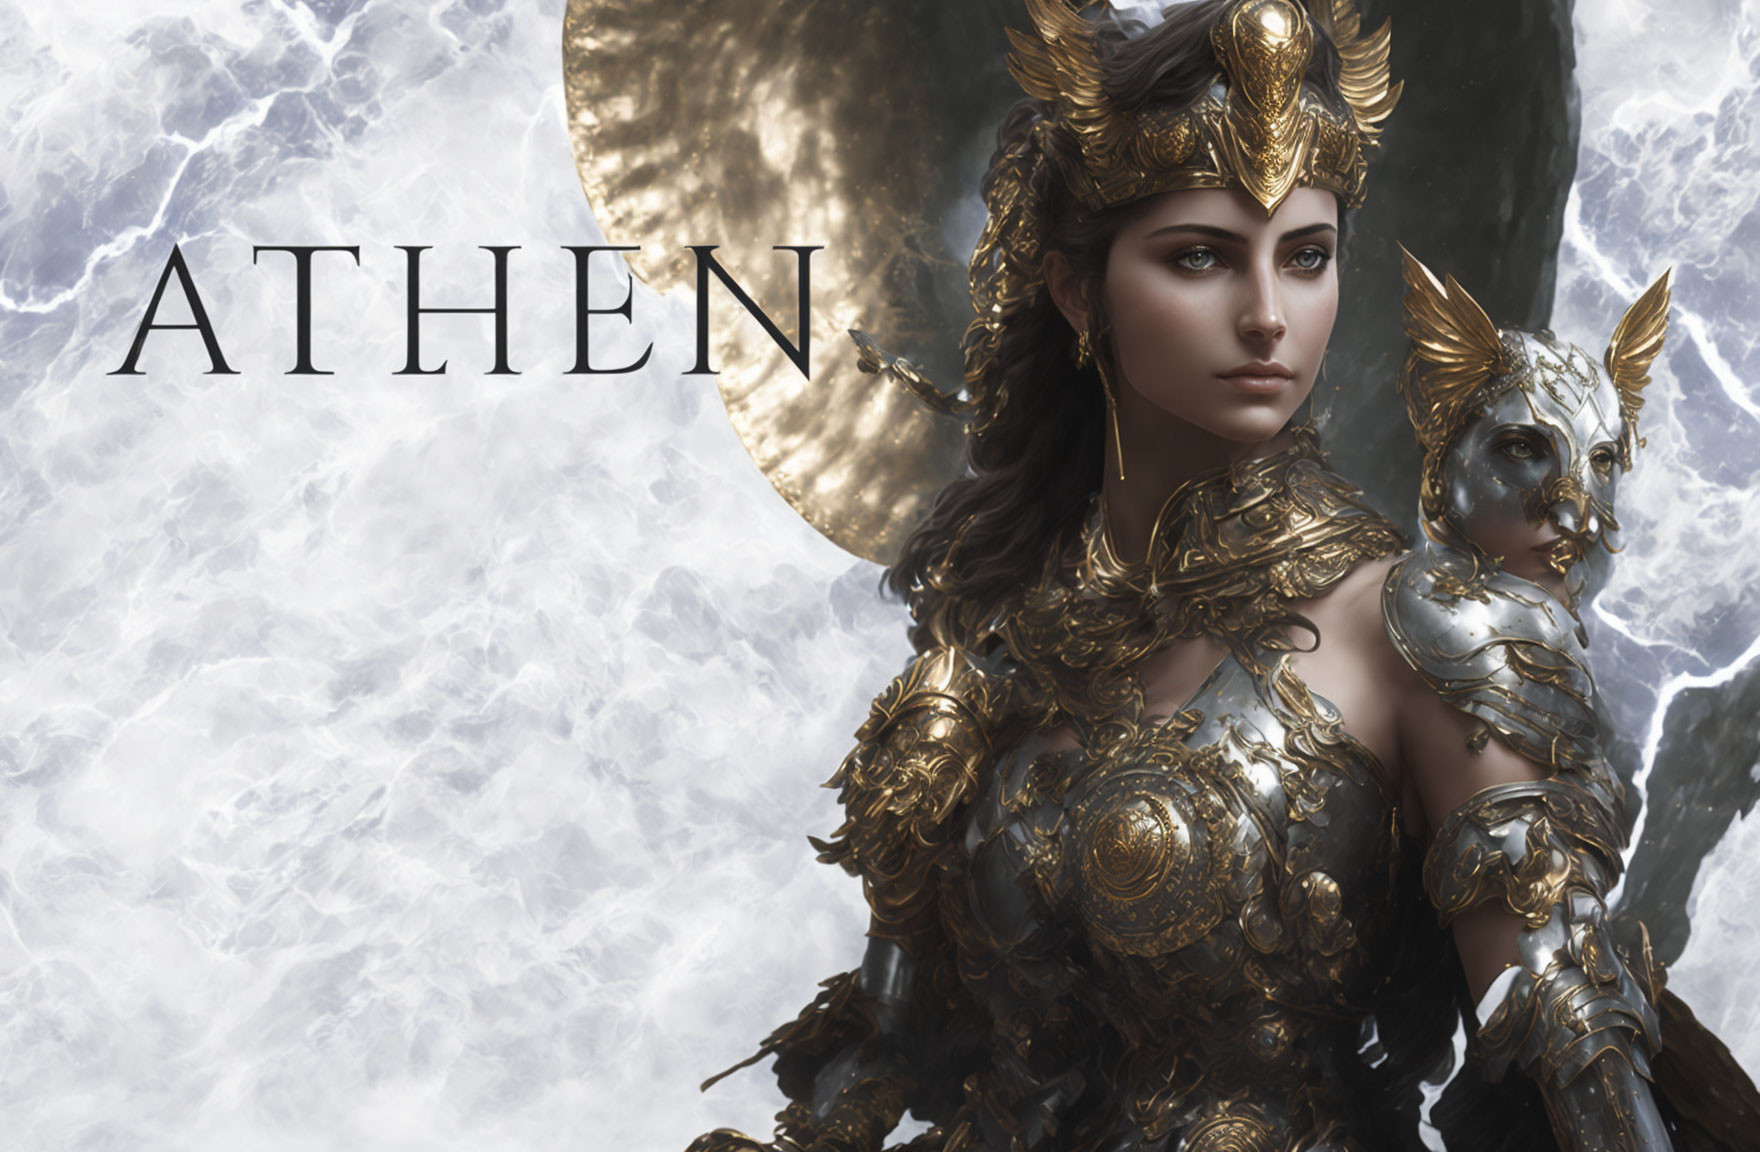 Warrior woman in golden armor with stylized helmet in fantasy artwork.